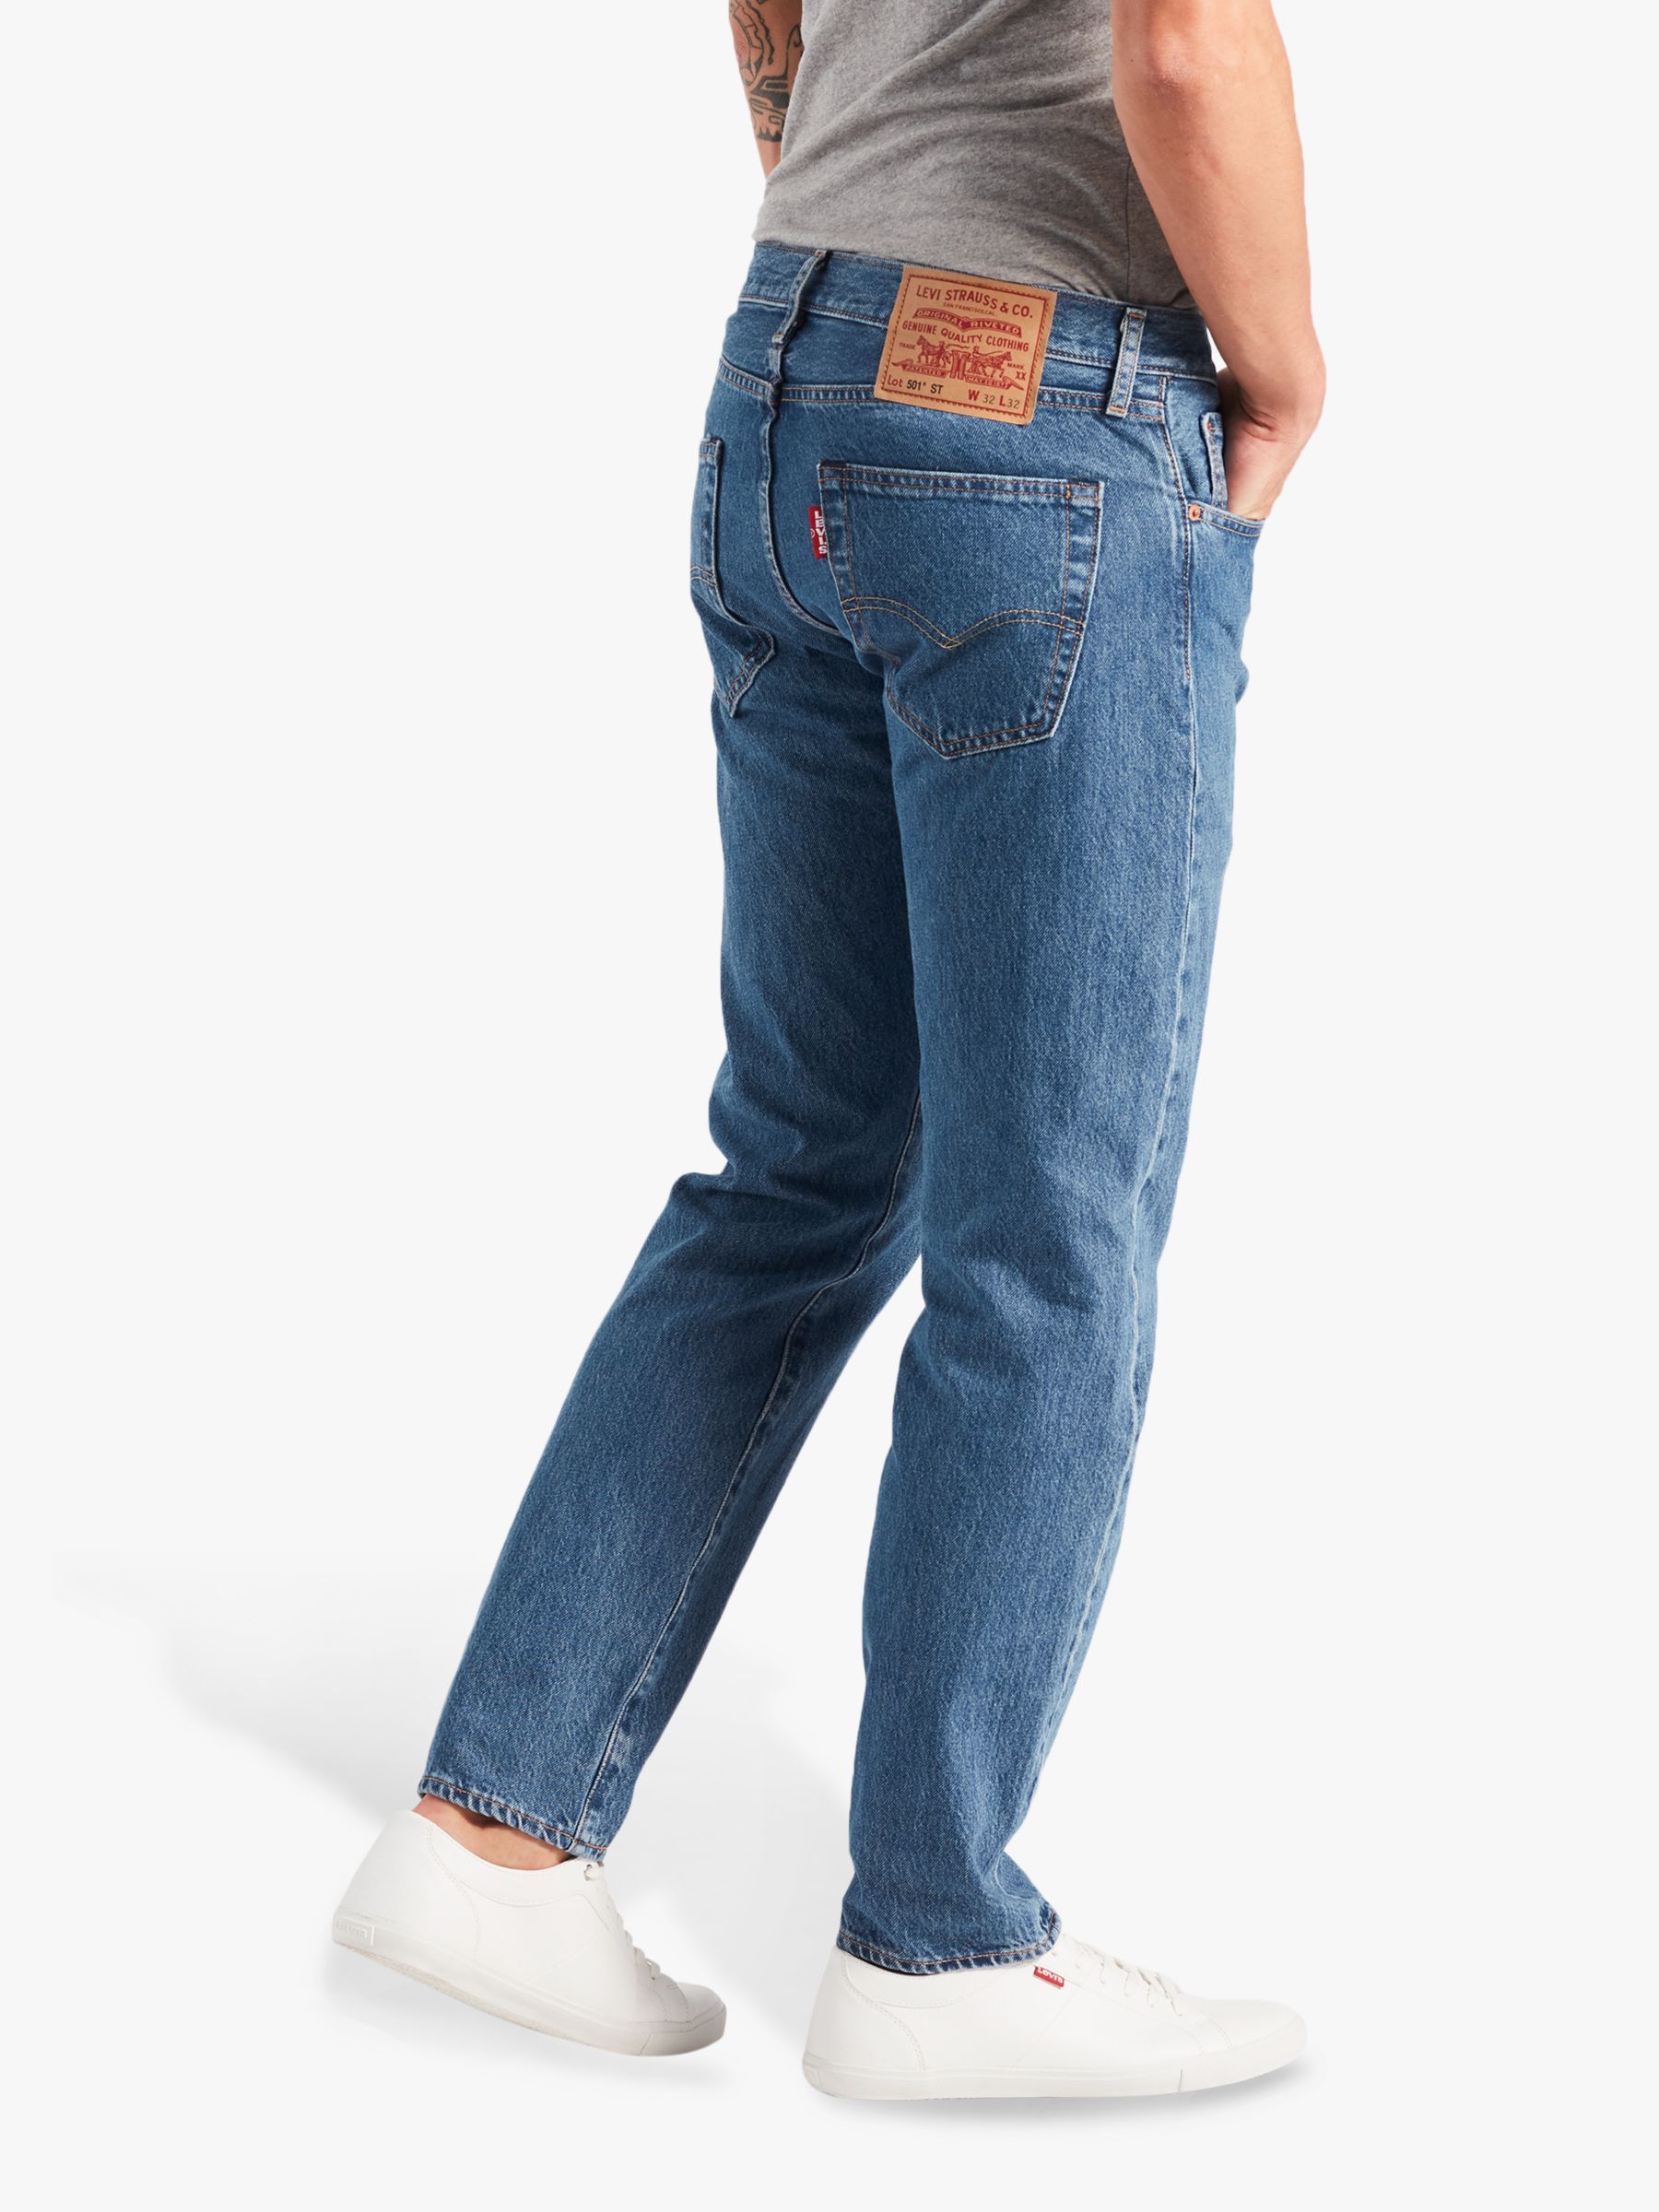 levi's 501 taper jeans mens